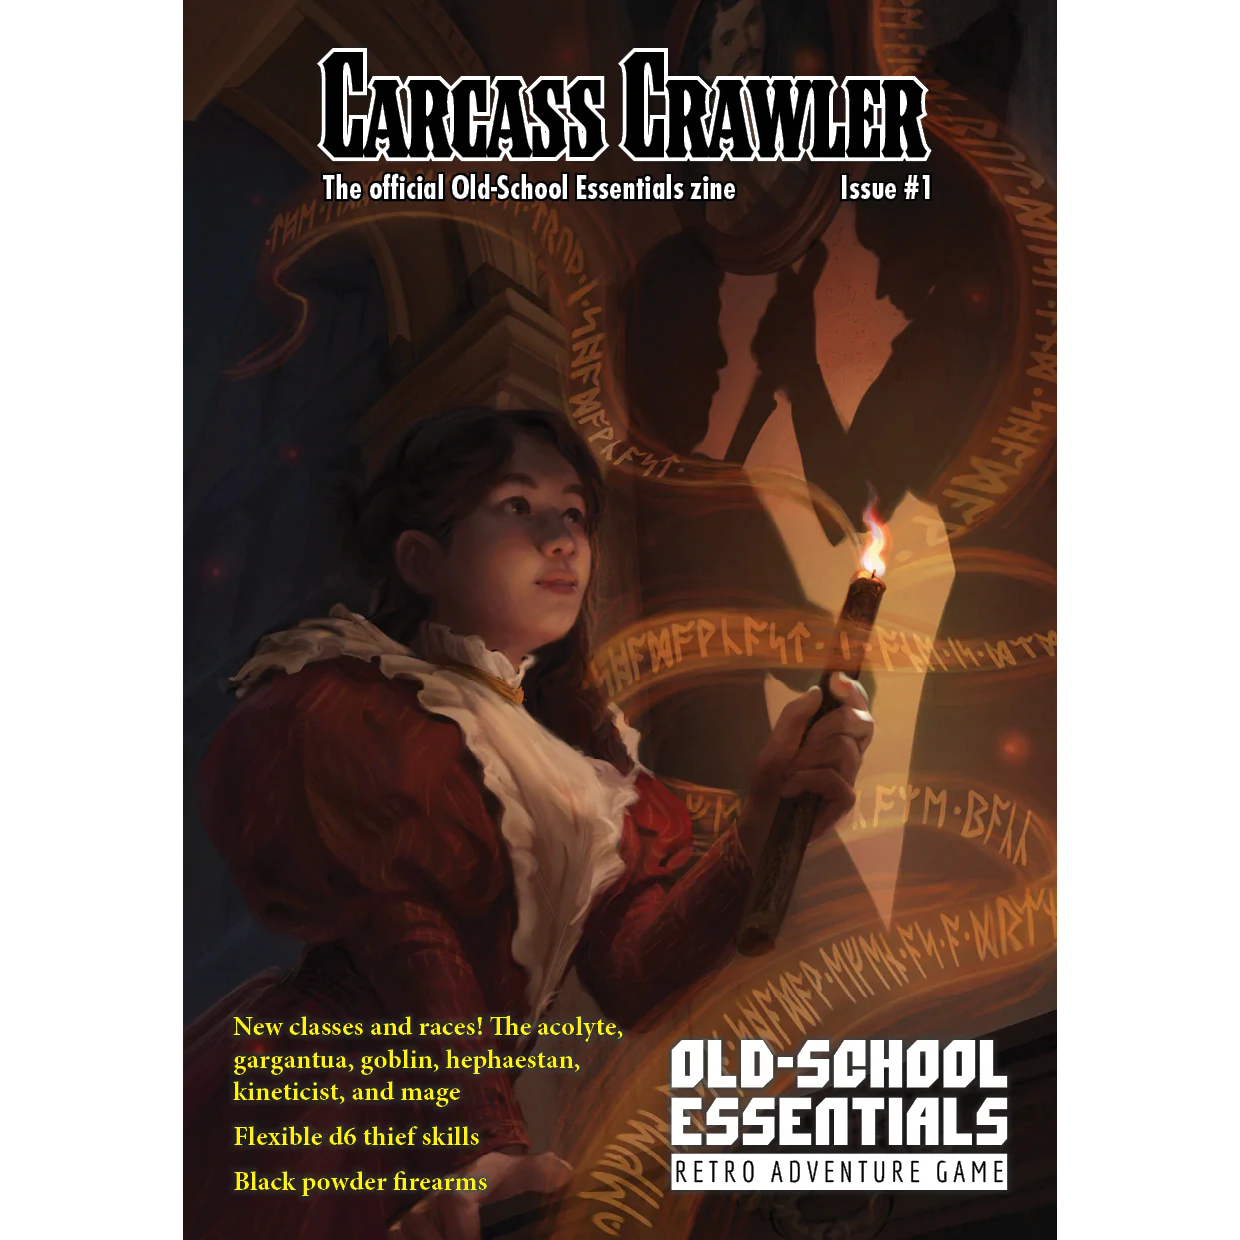 Carcass Crawler Issue #1